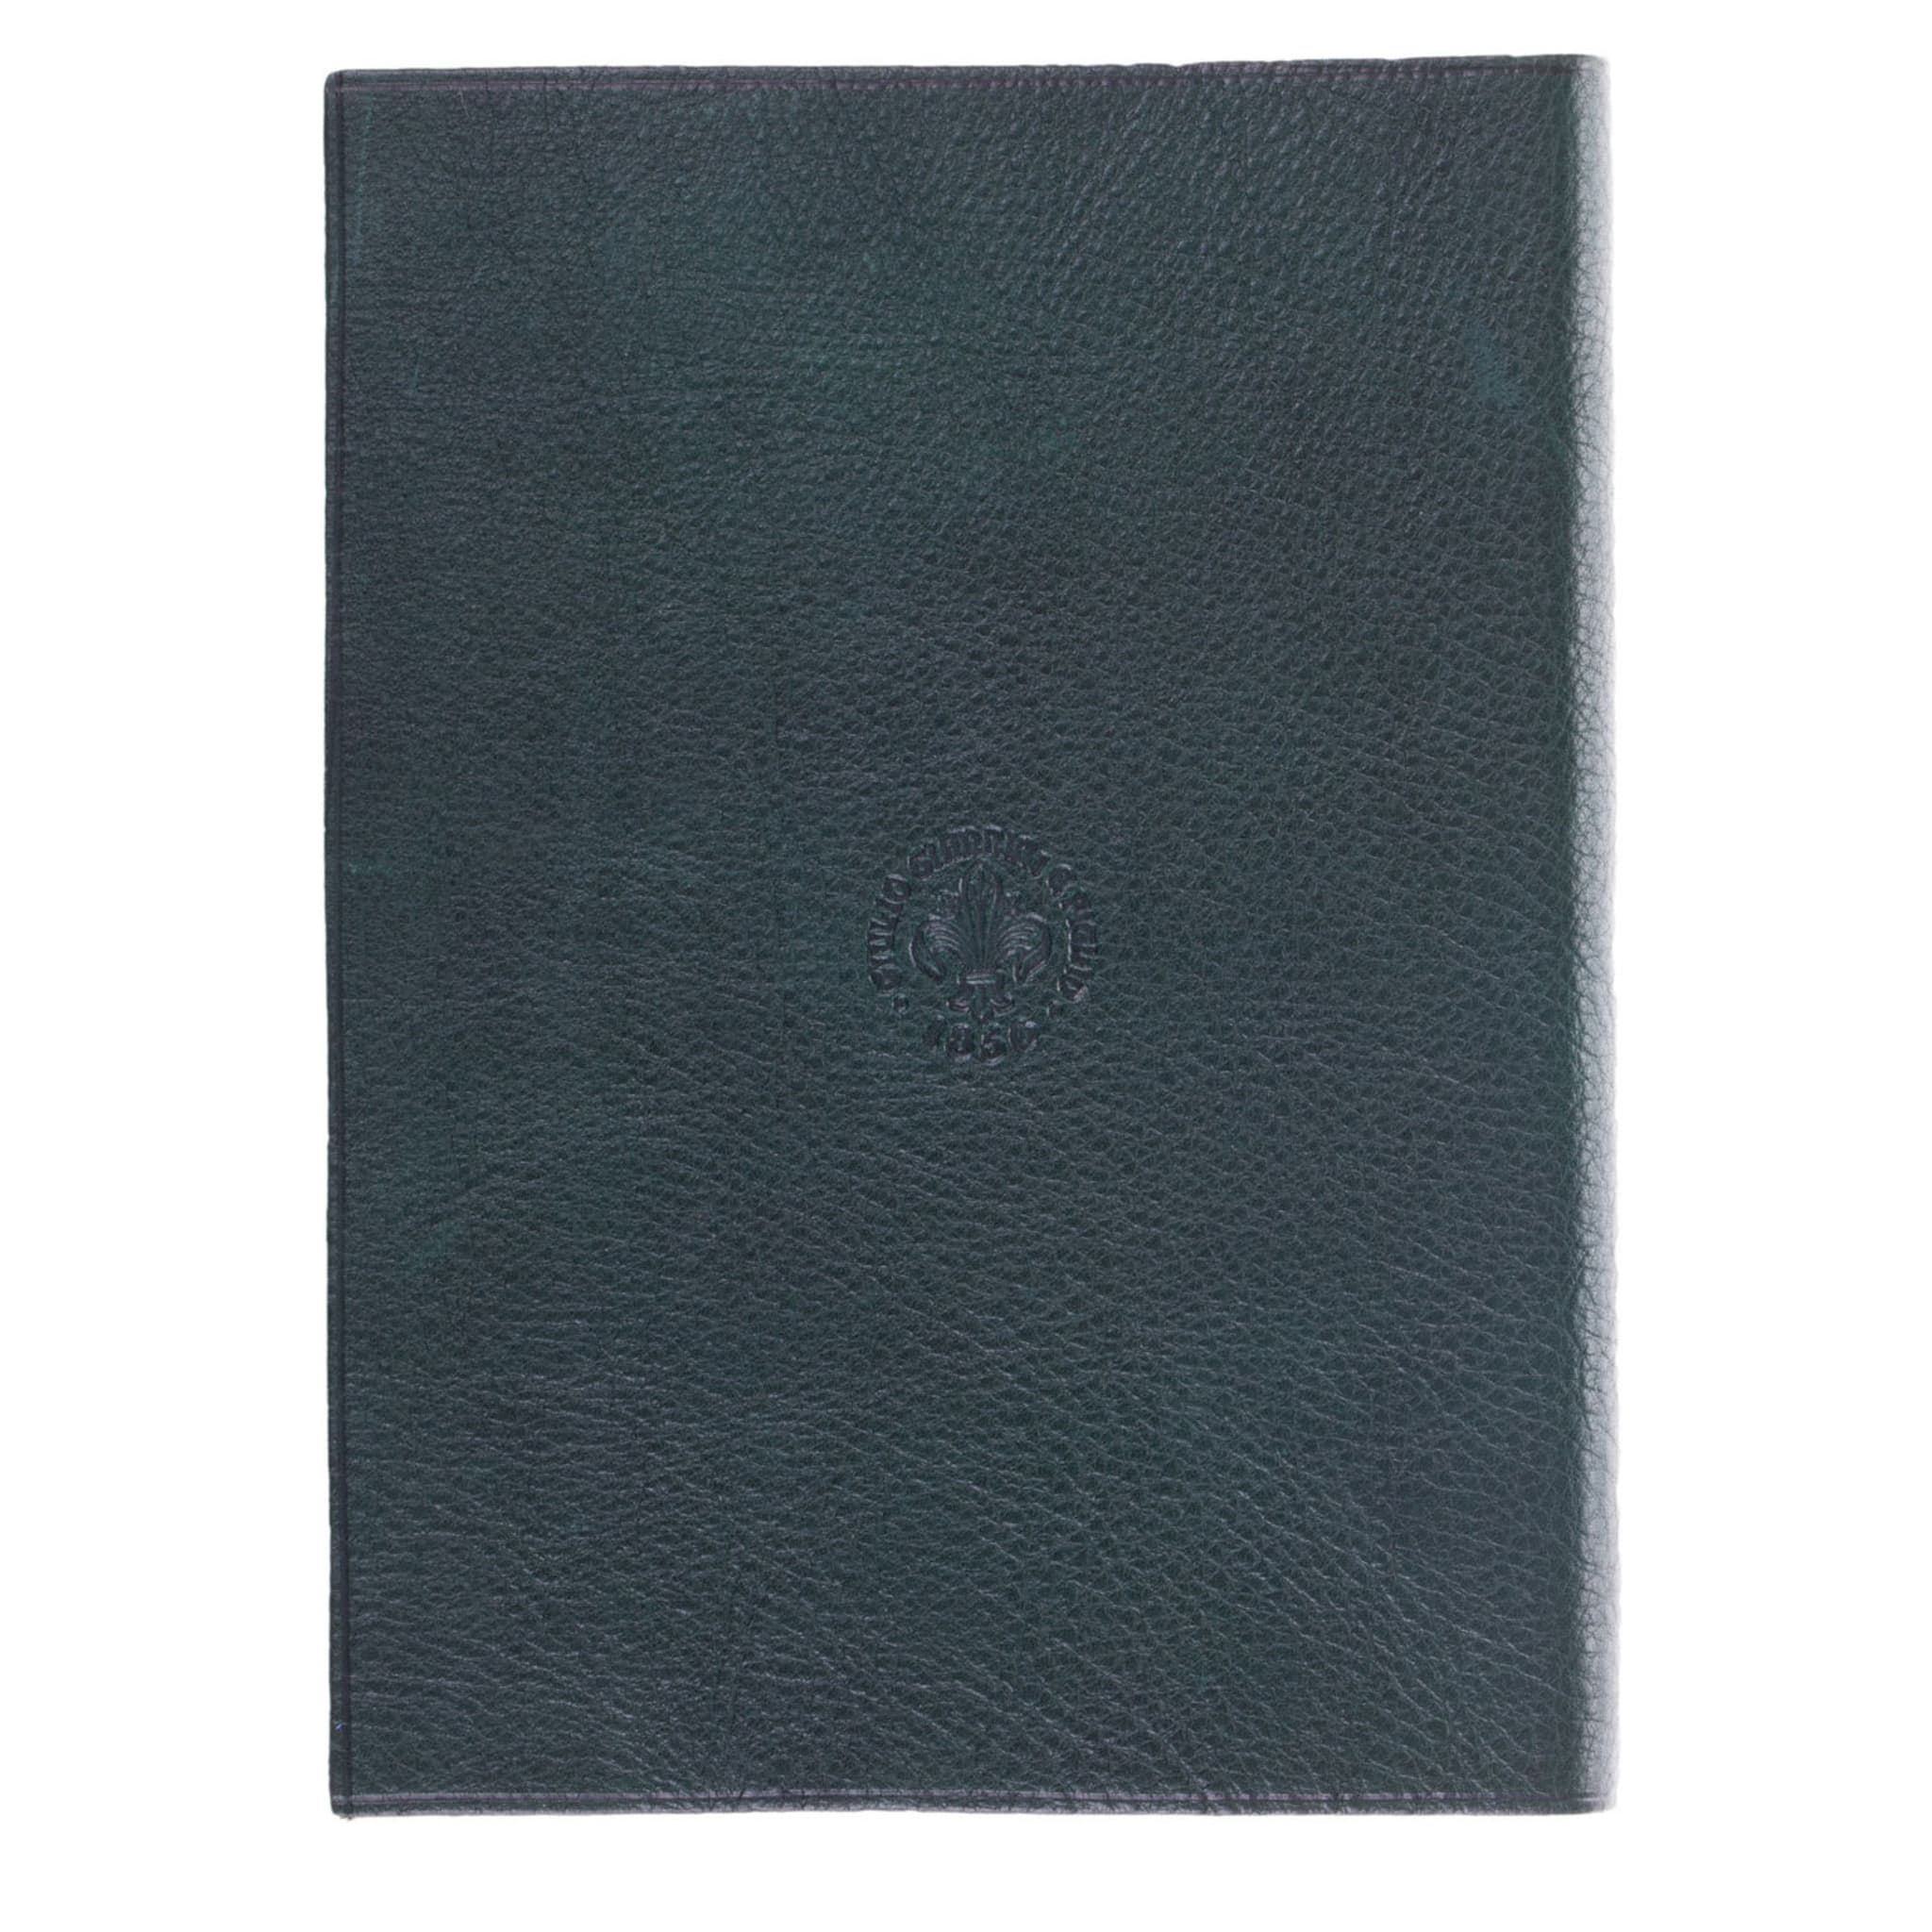 Monogramma Leather Notebook - Alternative view 3